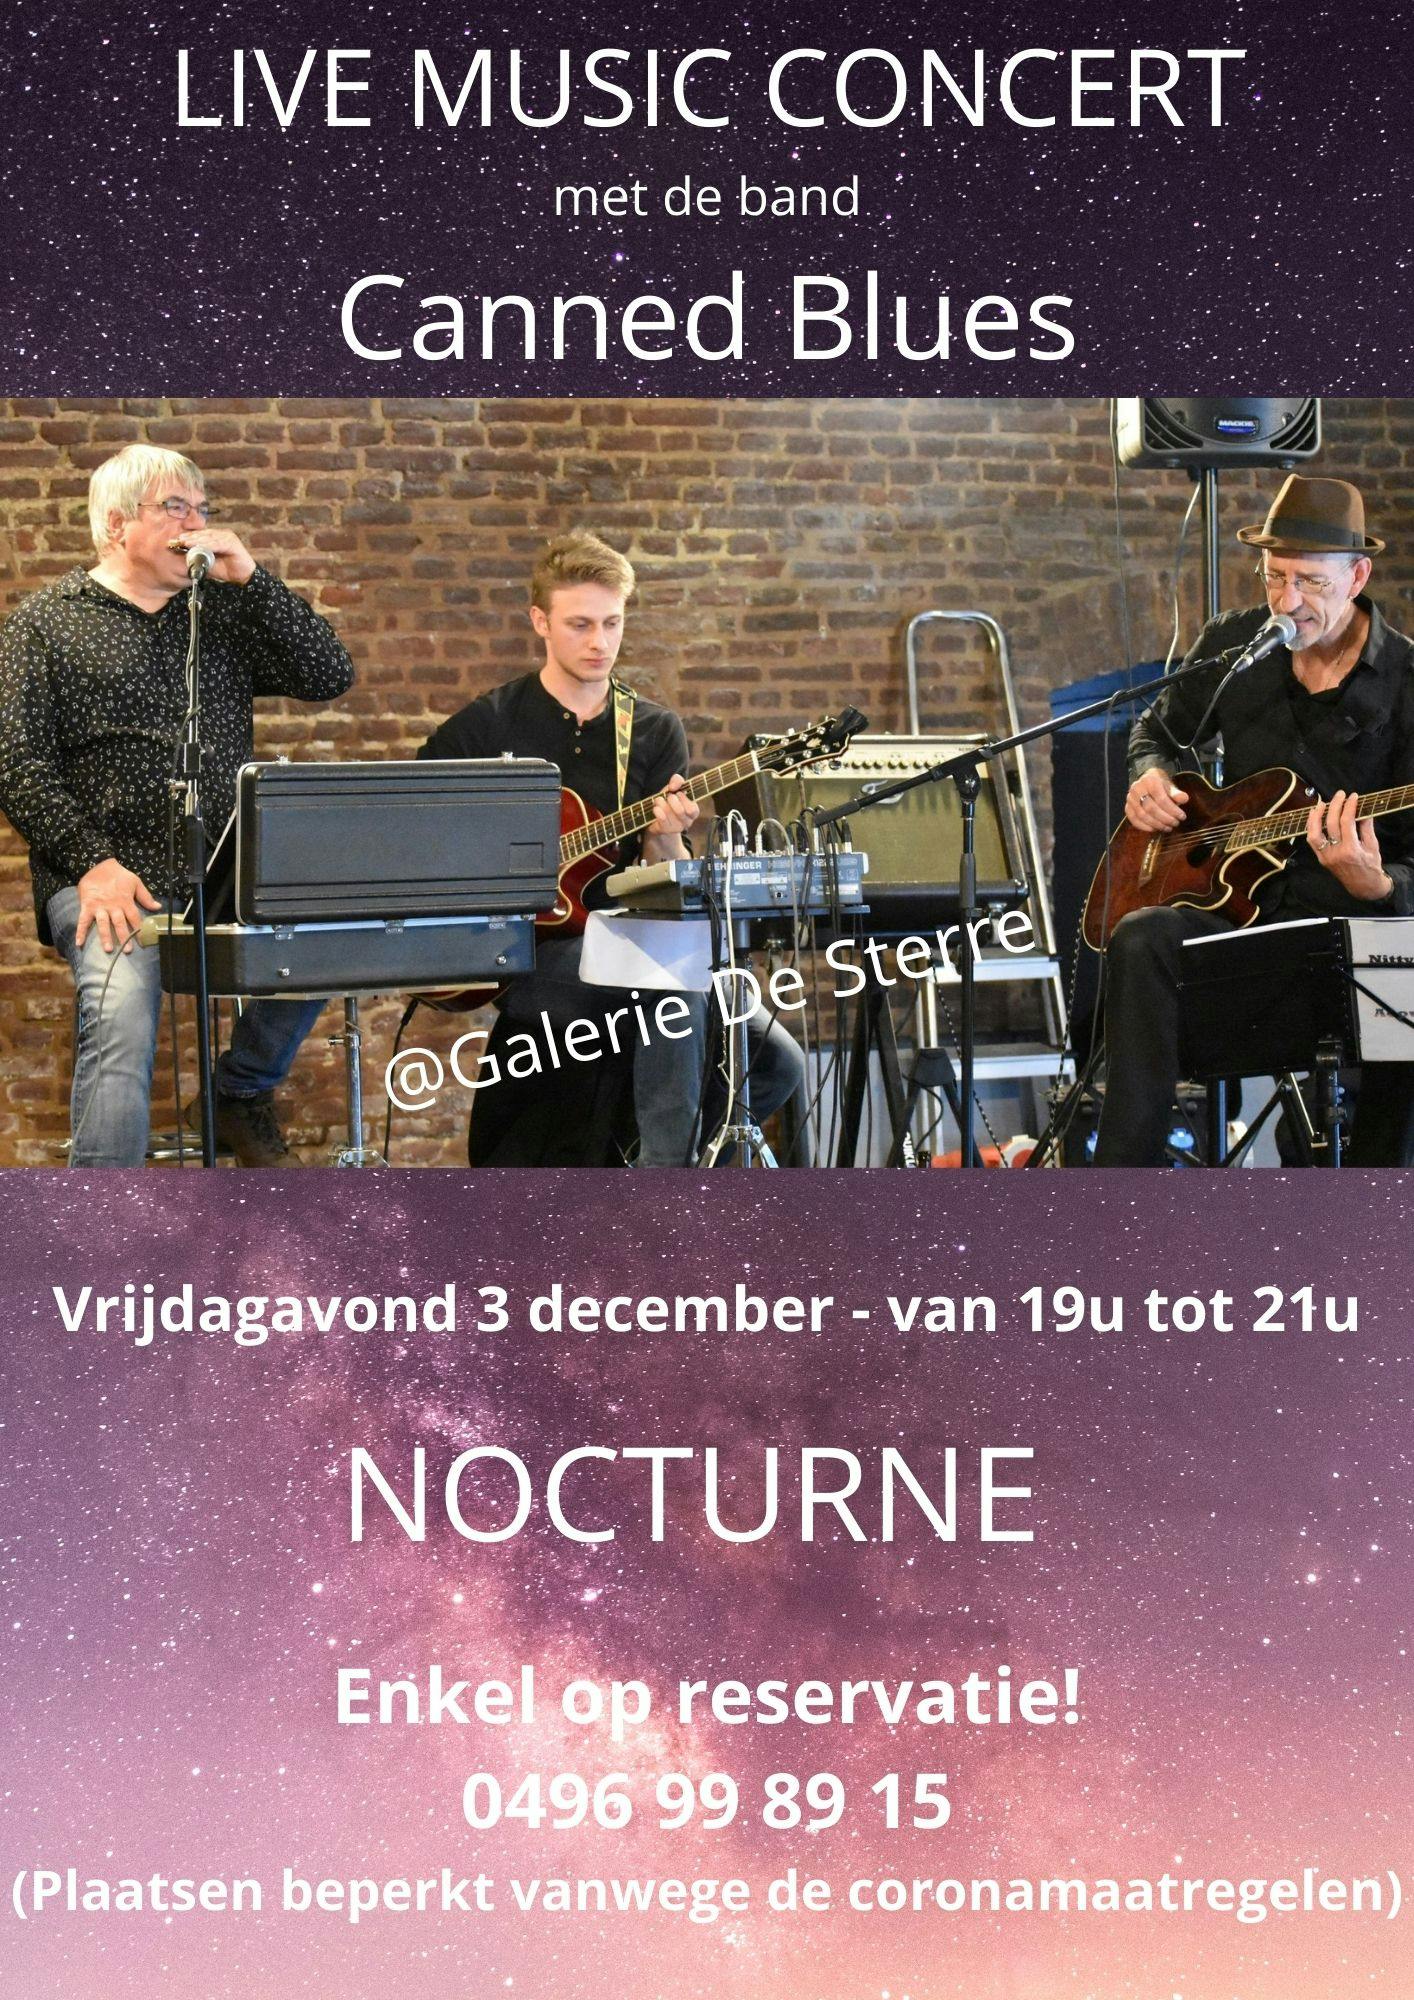 Live music concert met de band Canned Blues